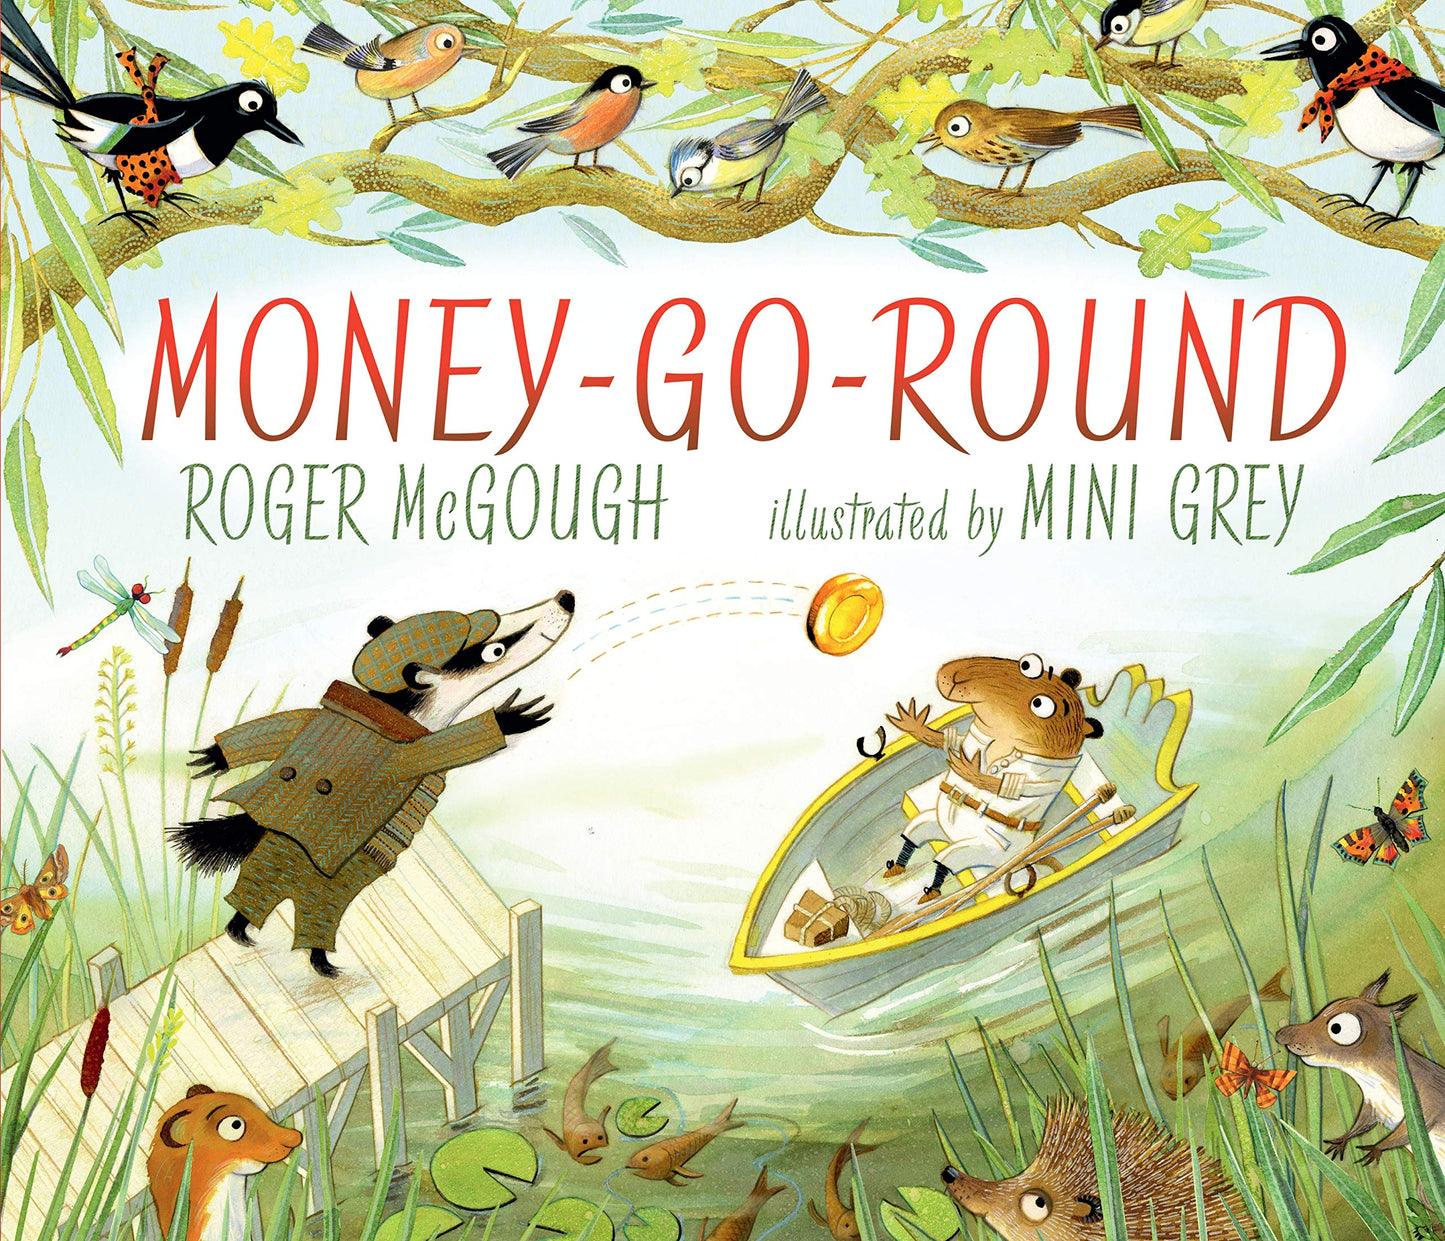 Money-Go-Round by Roger McGough & Mini Grey